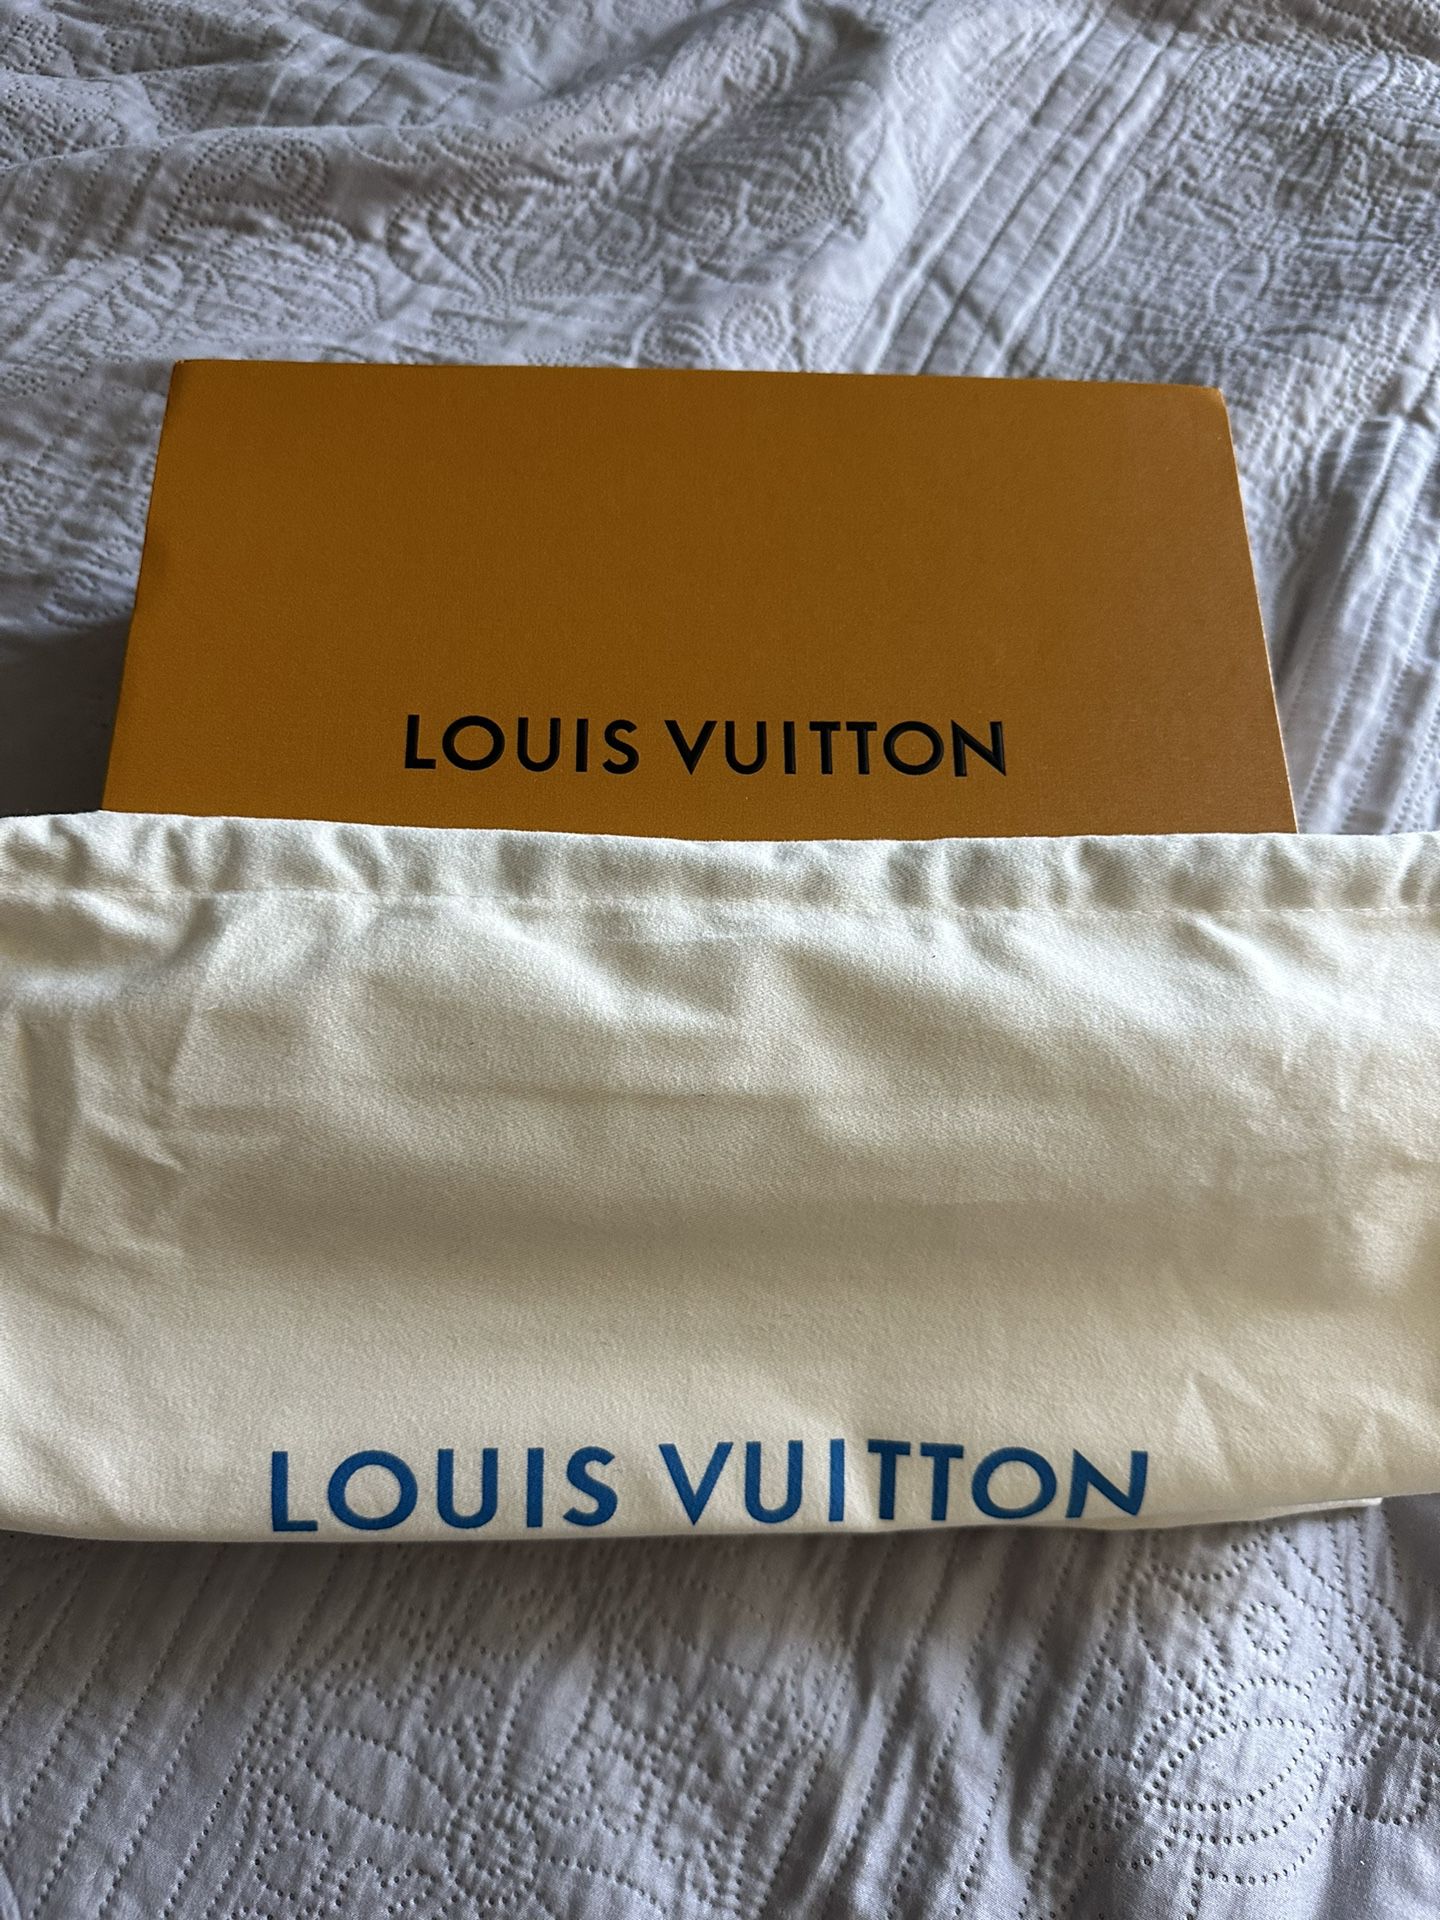 Louis Vuitton Box Empty 18 x 15 x 6.5 inch for Sale in Aventura, FL -  OfferUp